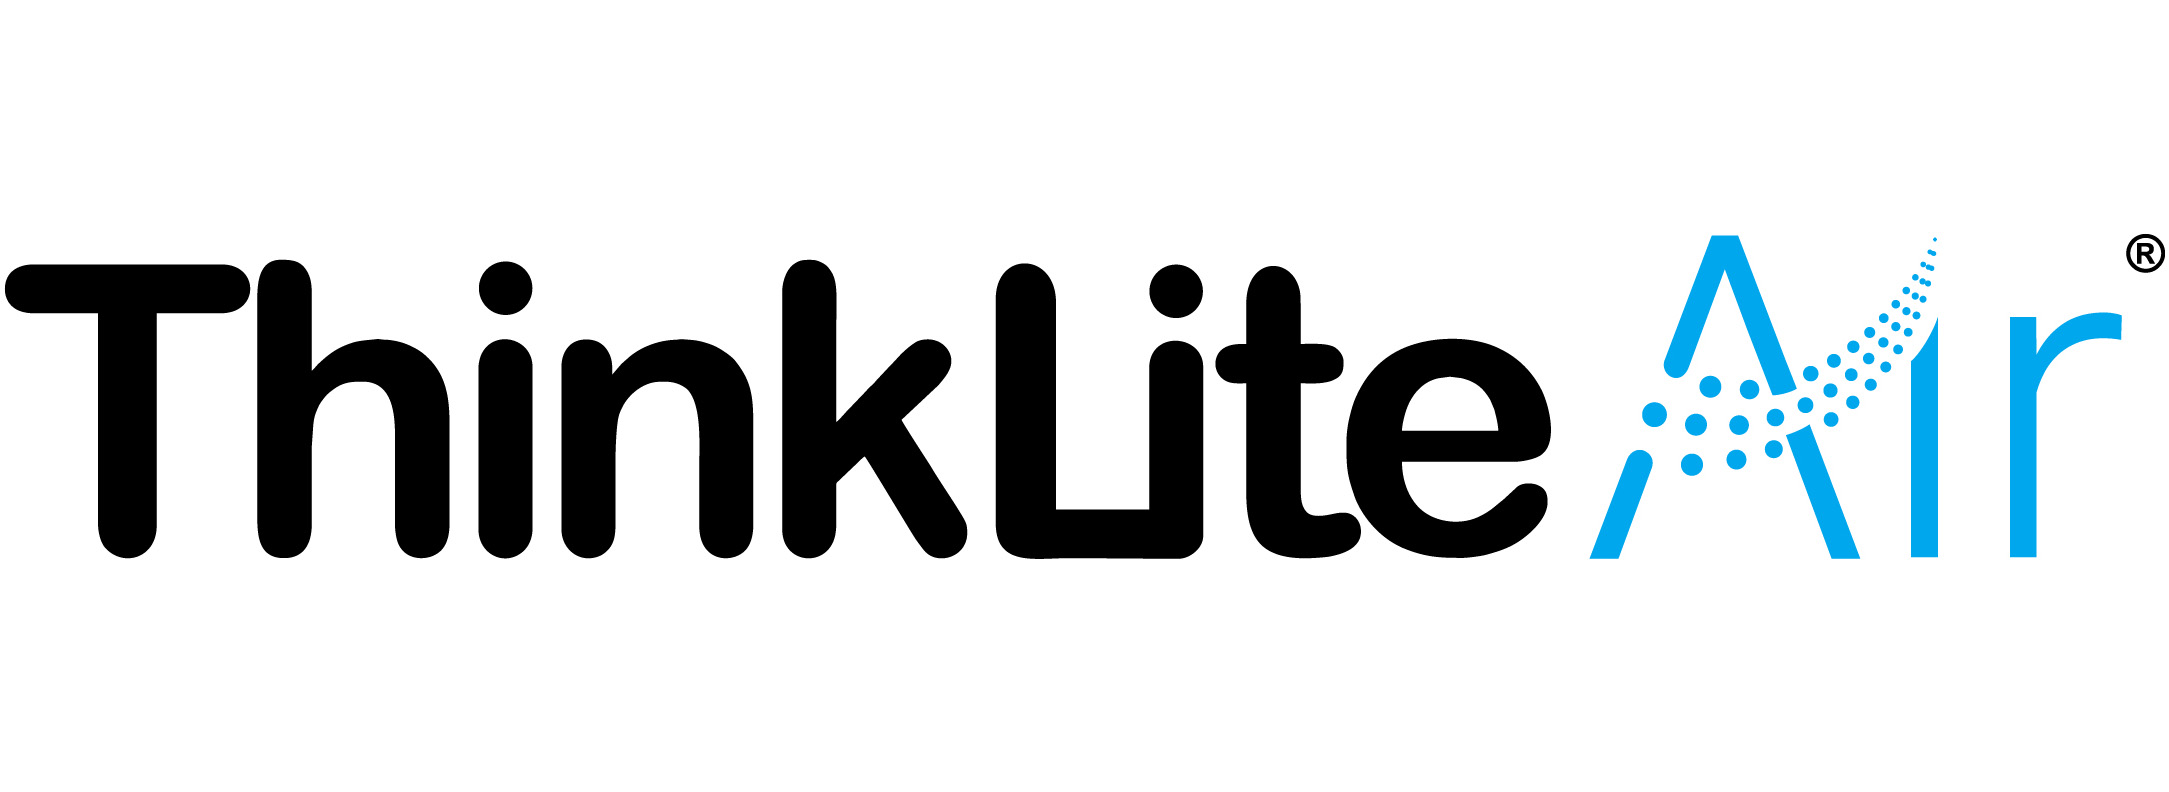 ThinkLite Air